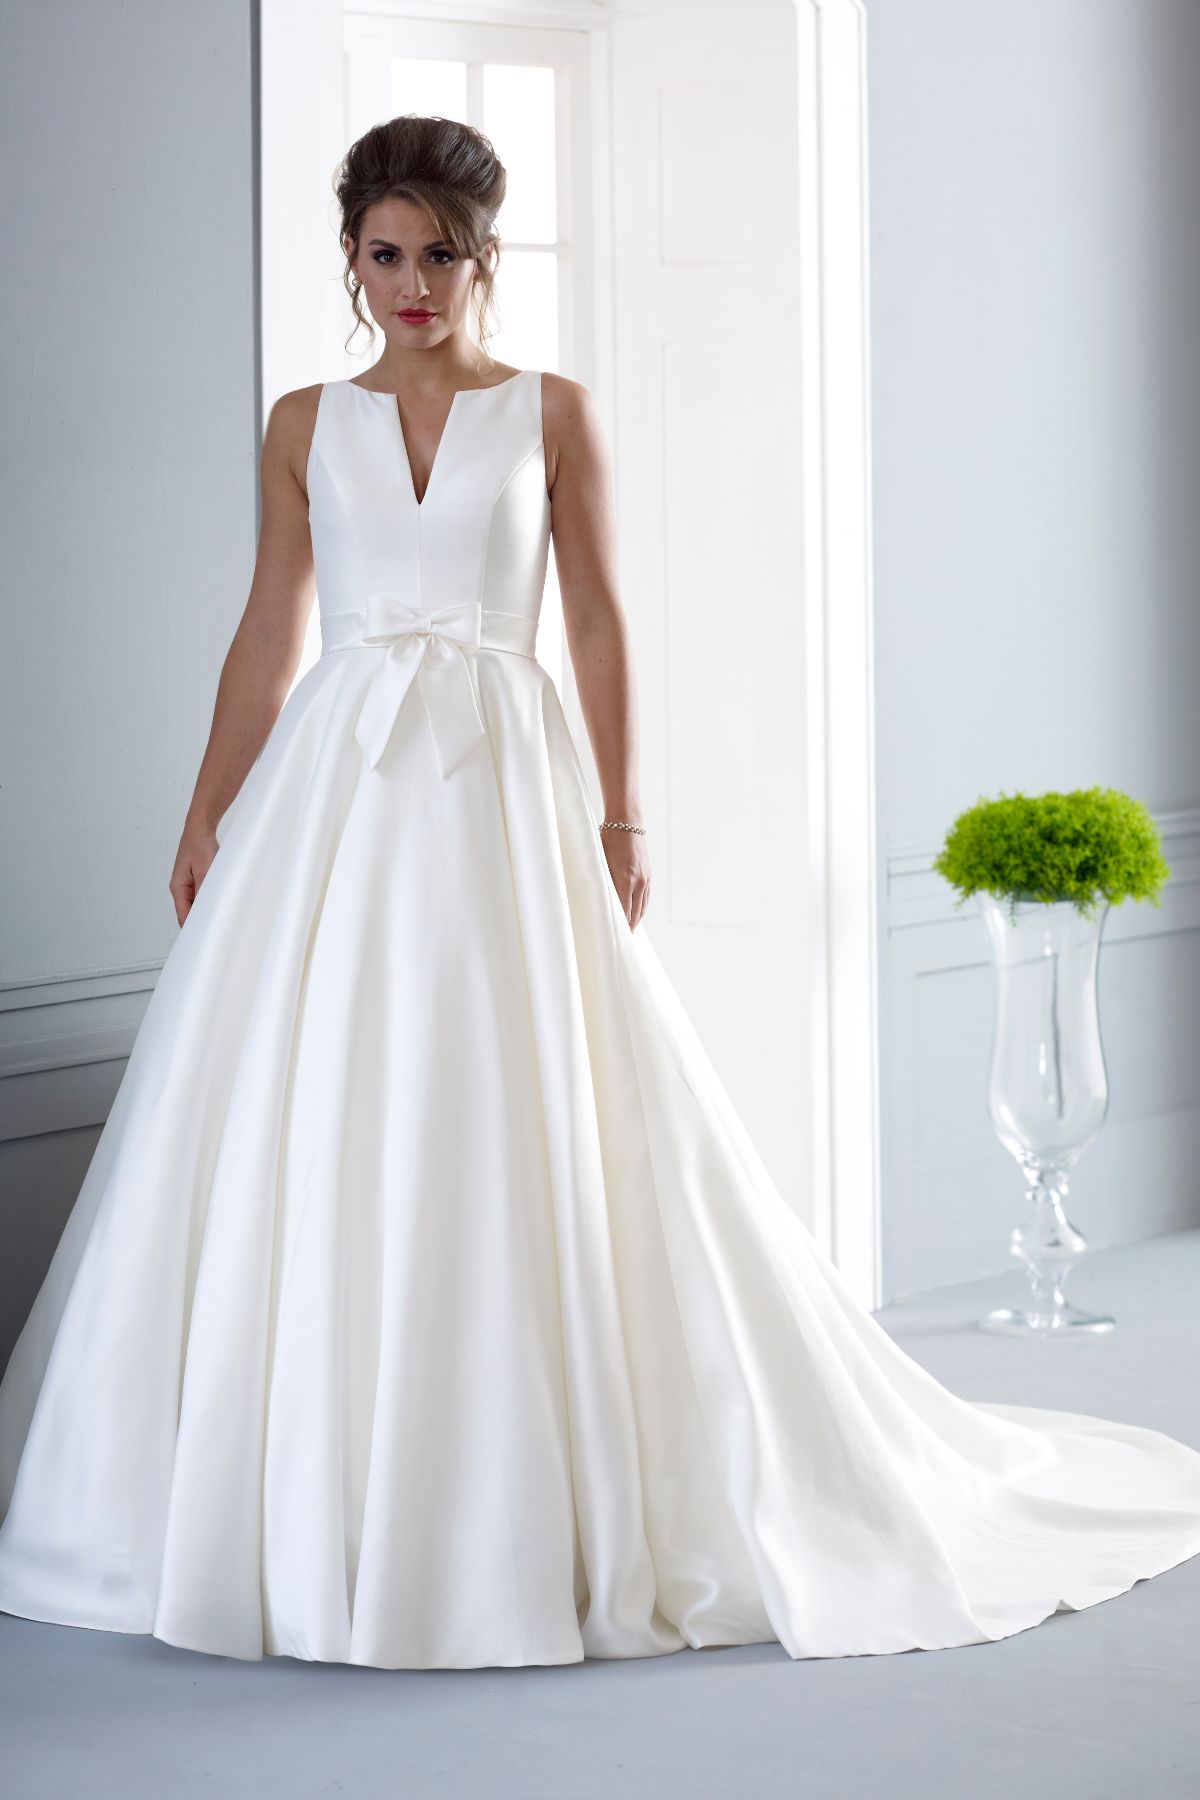 Best Dress 2 Impress Bridal-Image-99